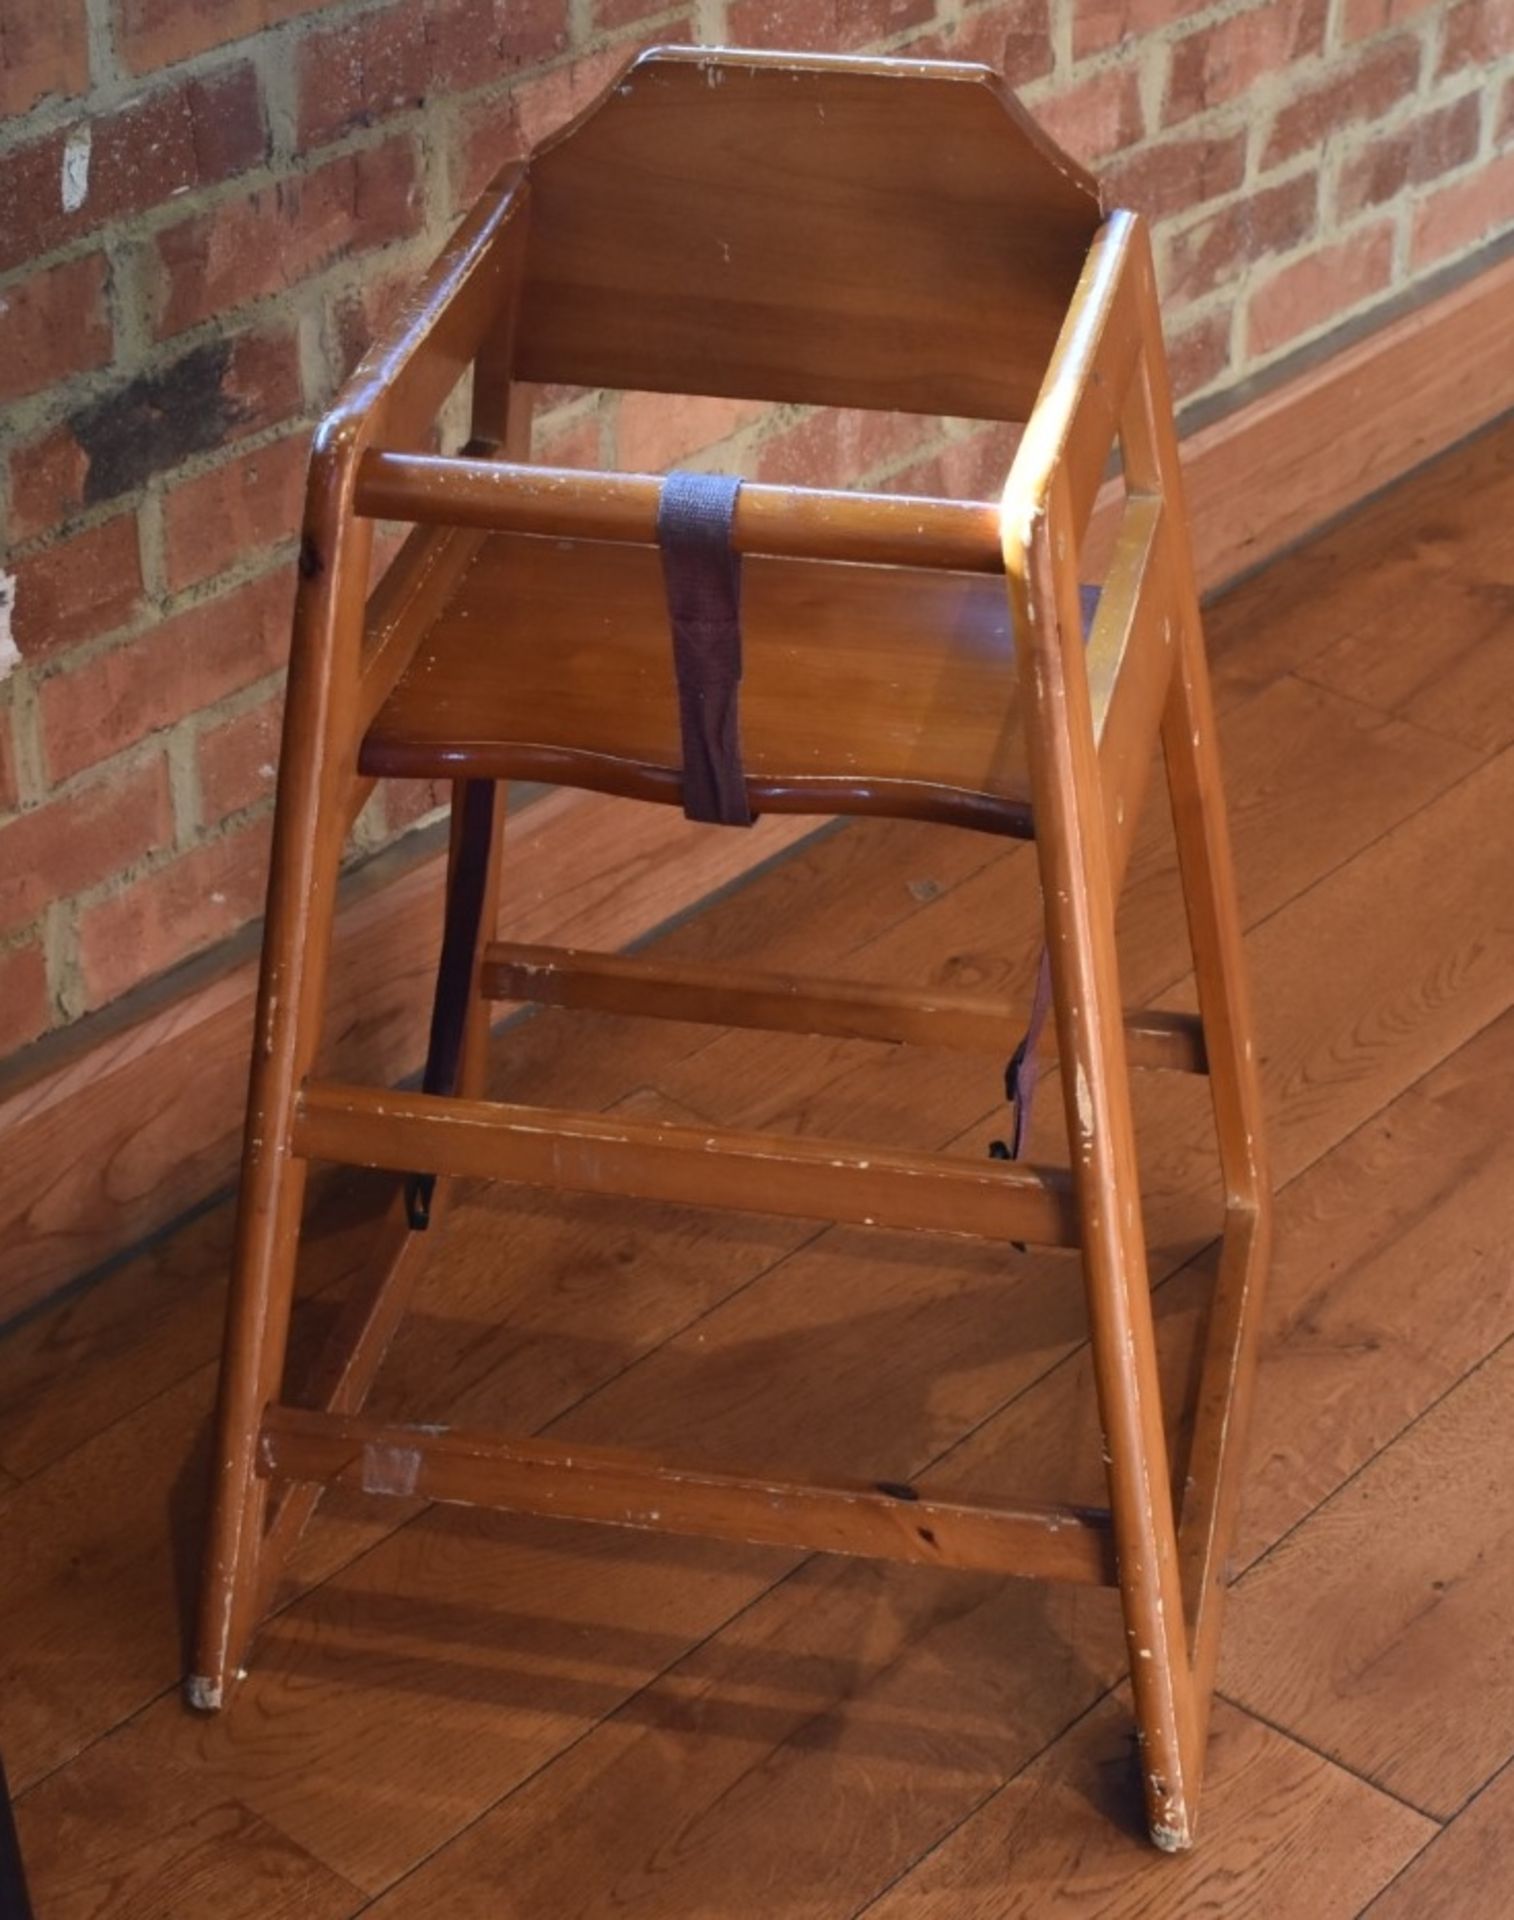 4 x Wooden Restaurant Children's High Chairs - CL499 - Location: London EN1 - Image 2 of 4